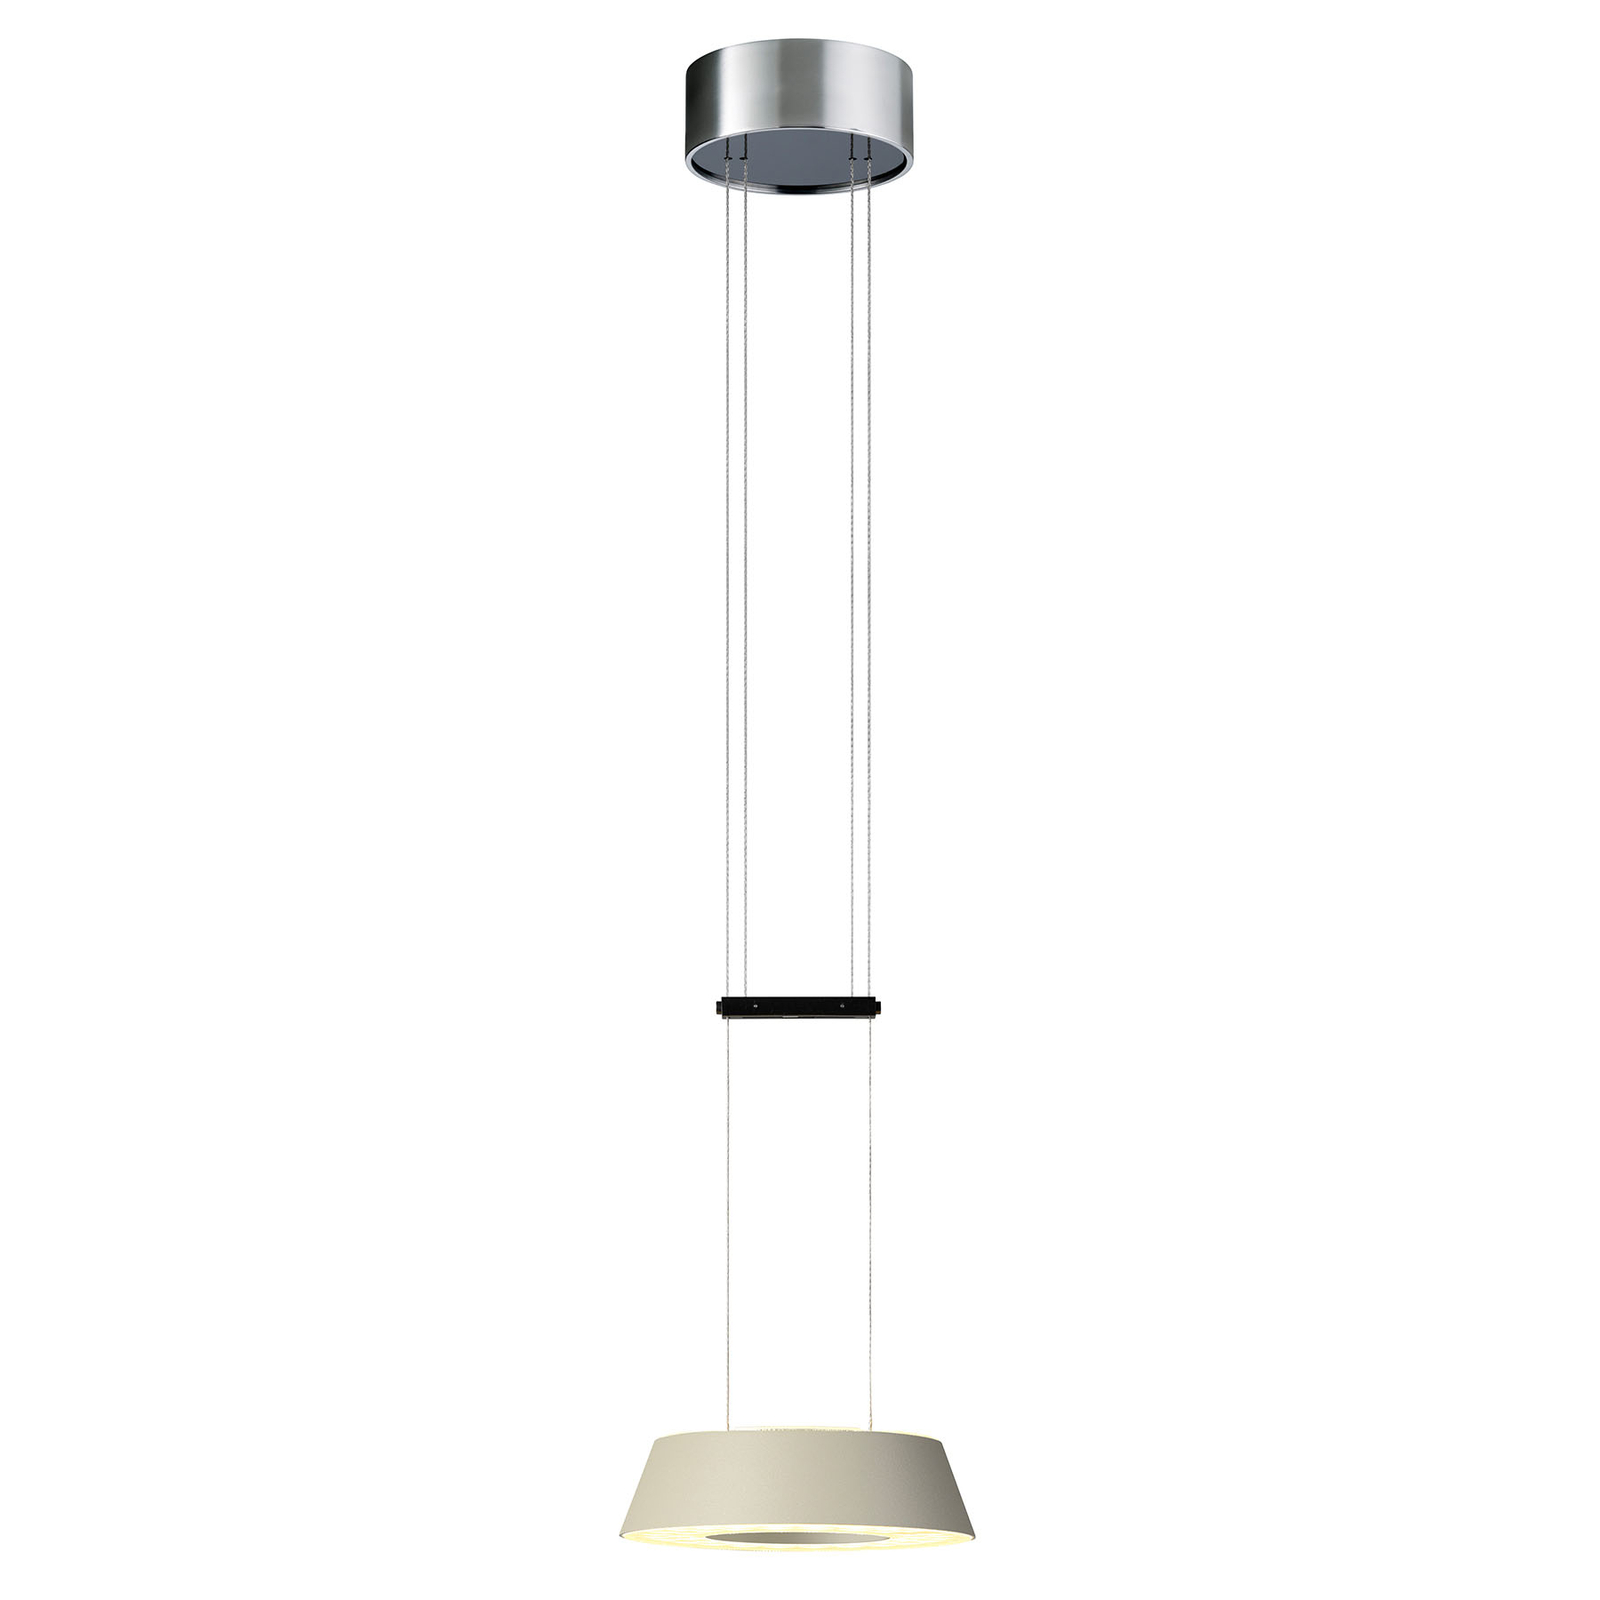 OLIGO Glance LED-riippuvalo, 1 lamp. kashmir